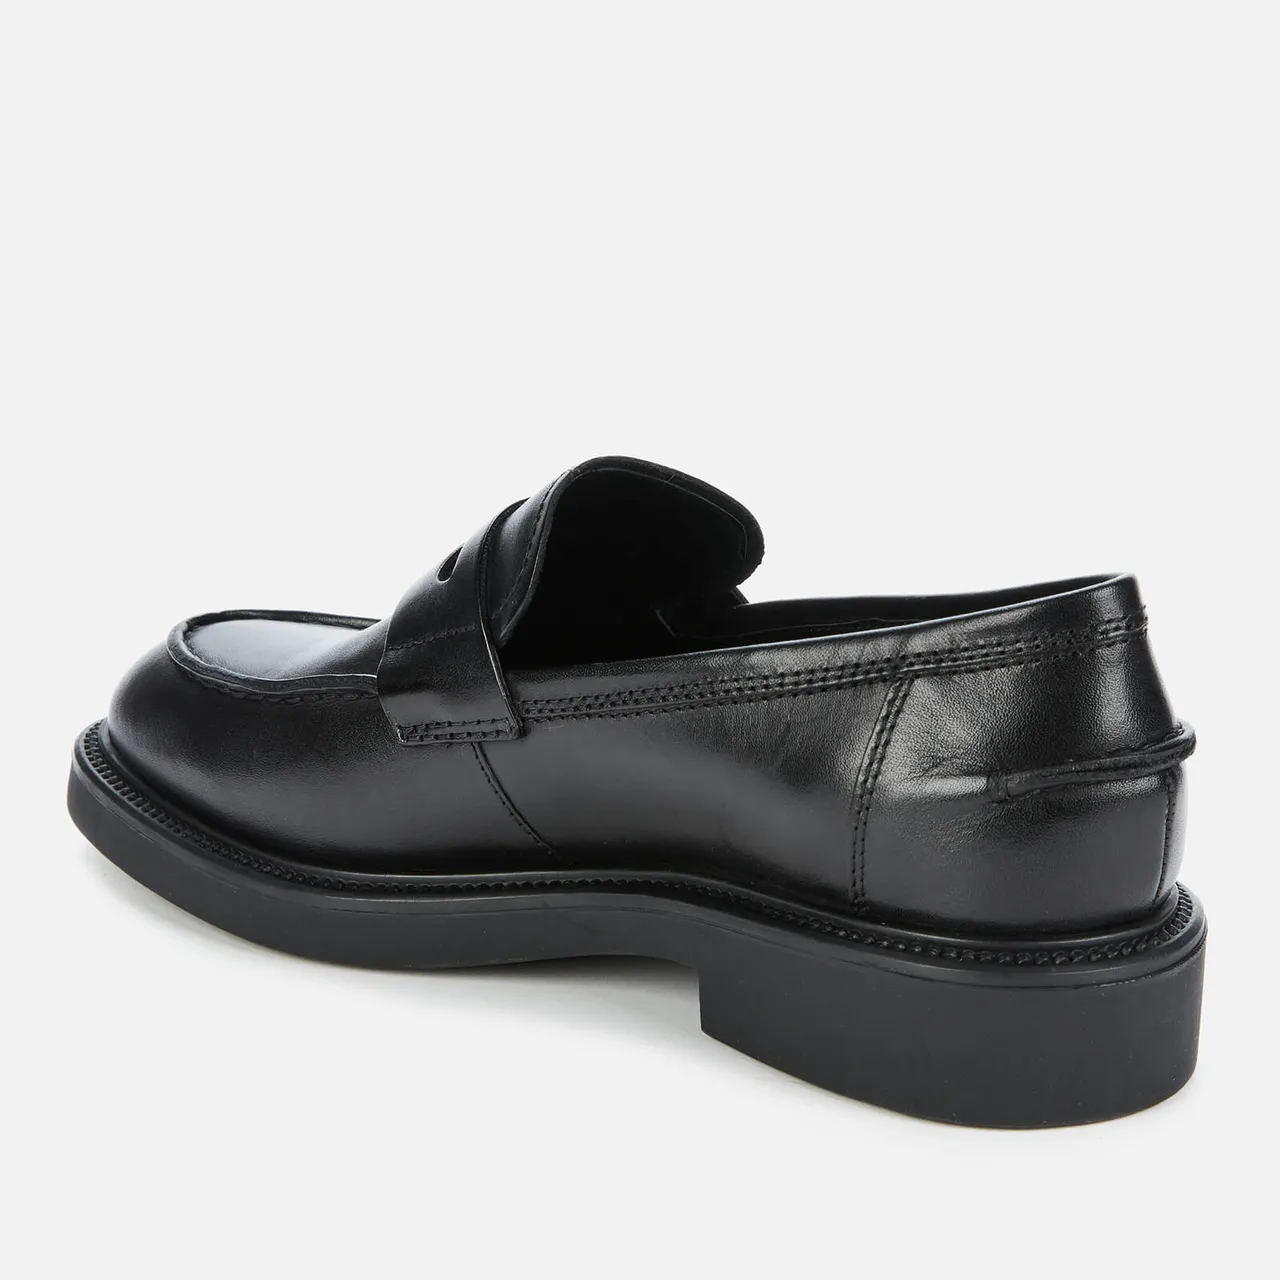 Vagabond Women's Alex W Leather Loafers - Black